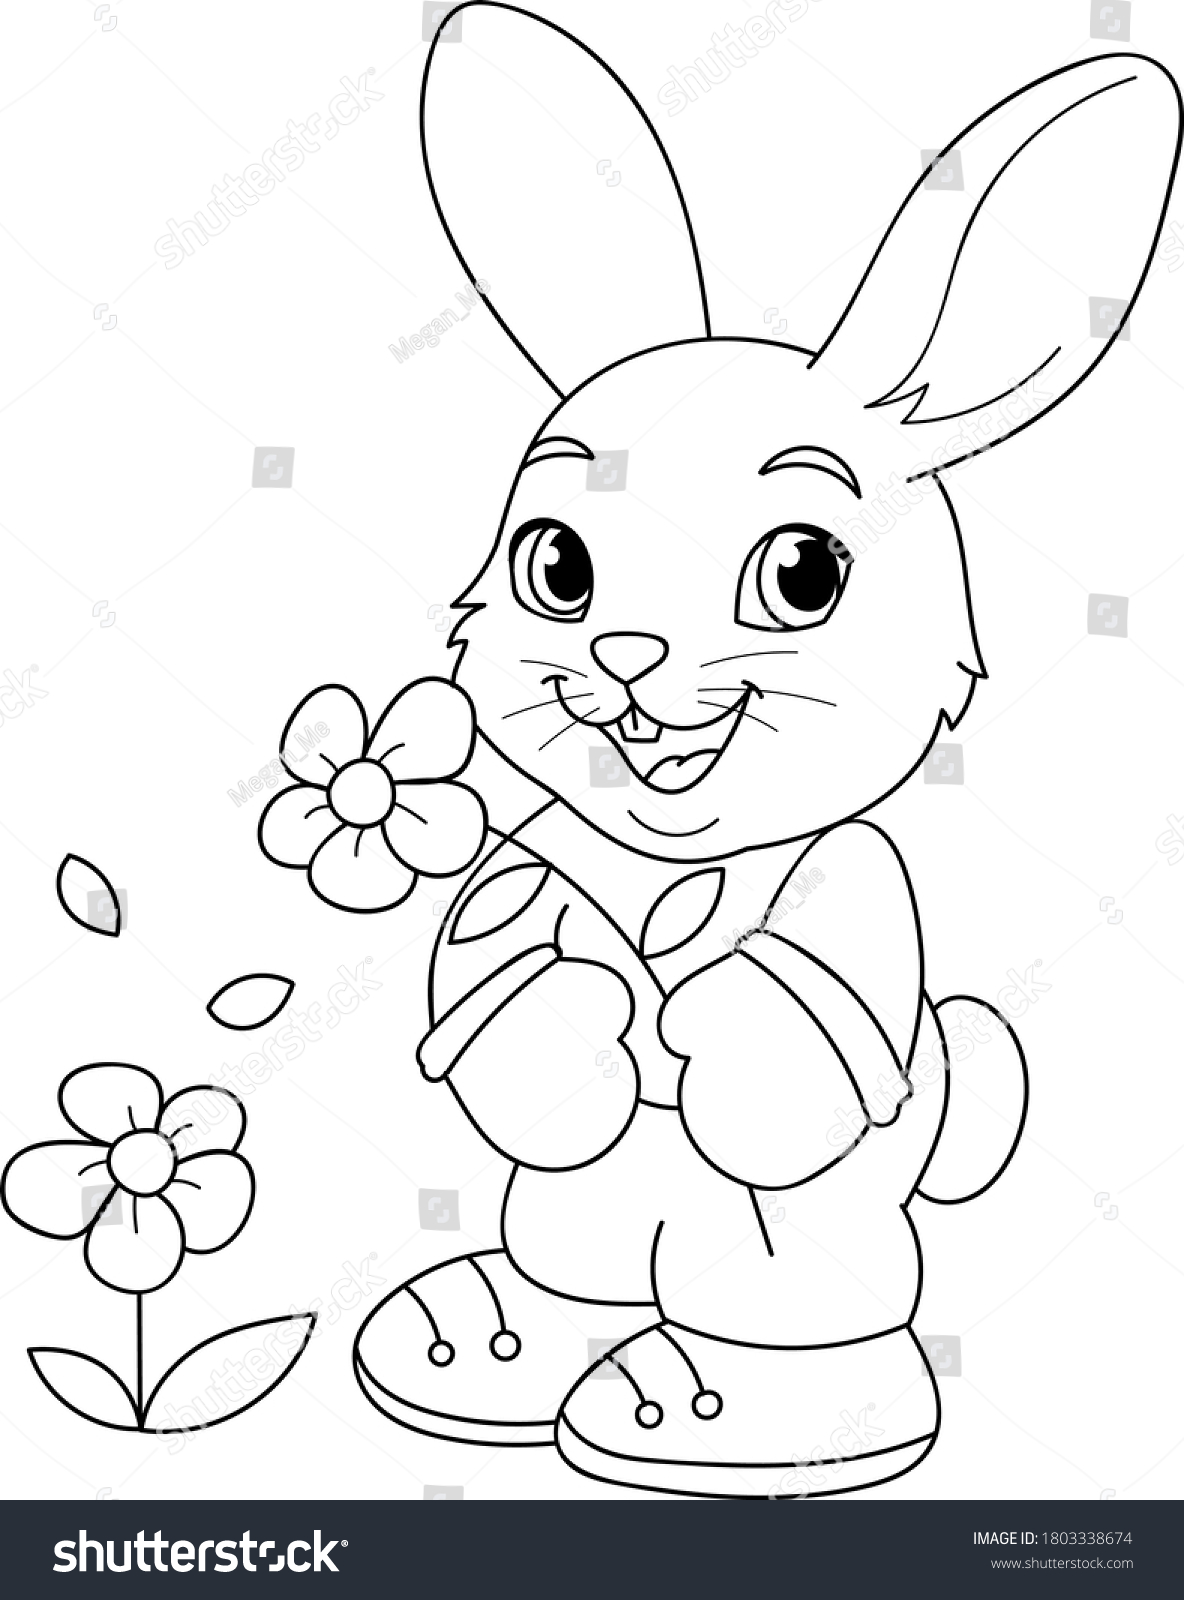 Bunny coloring book royalty